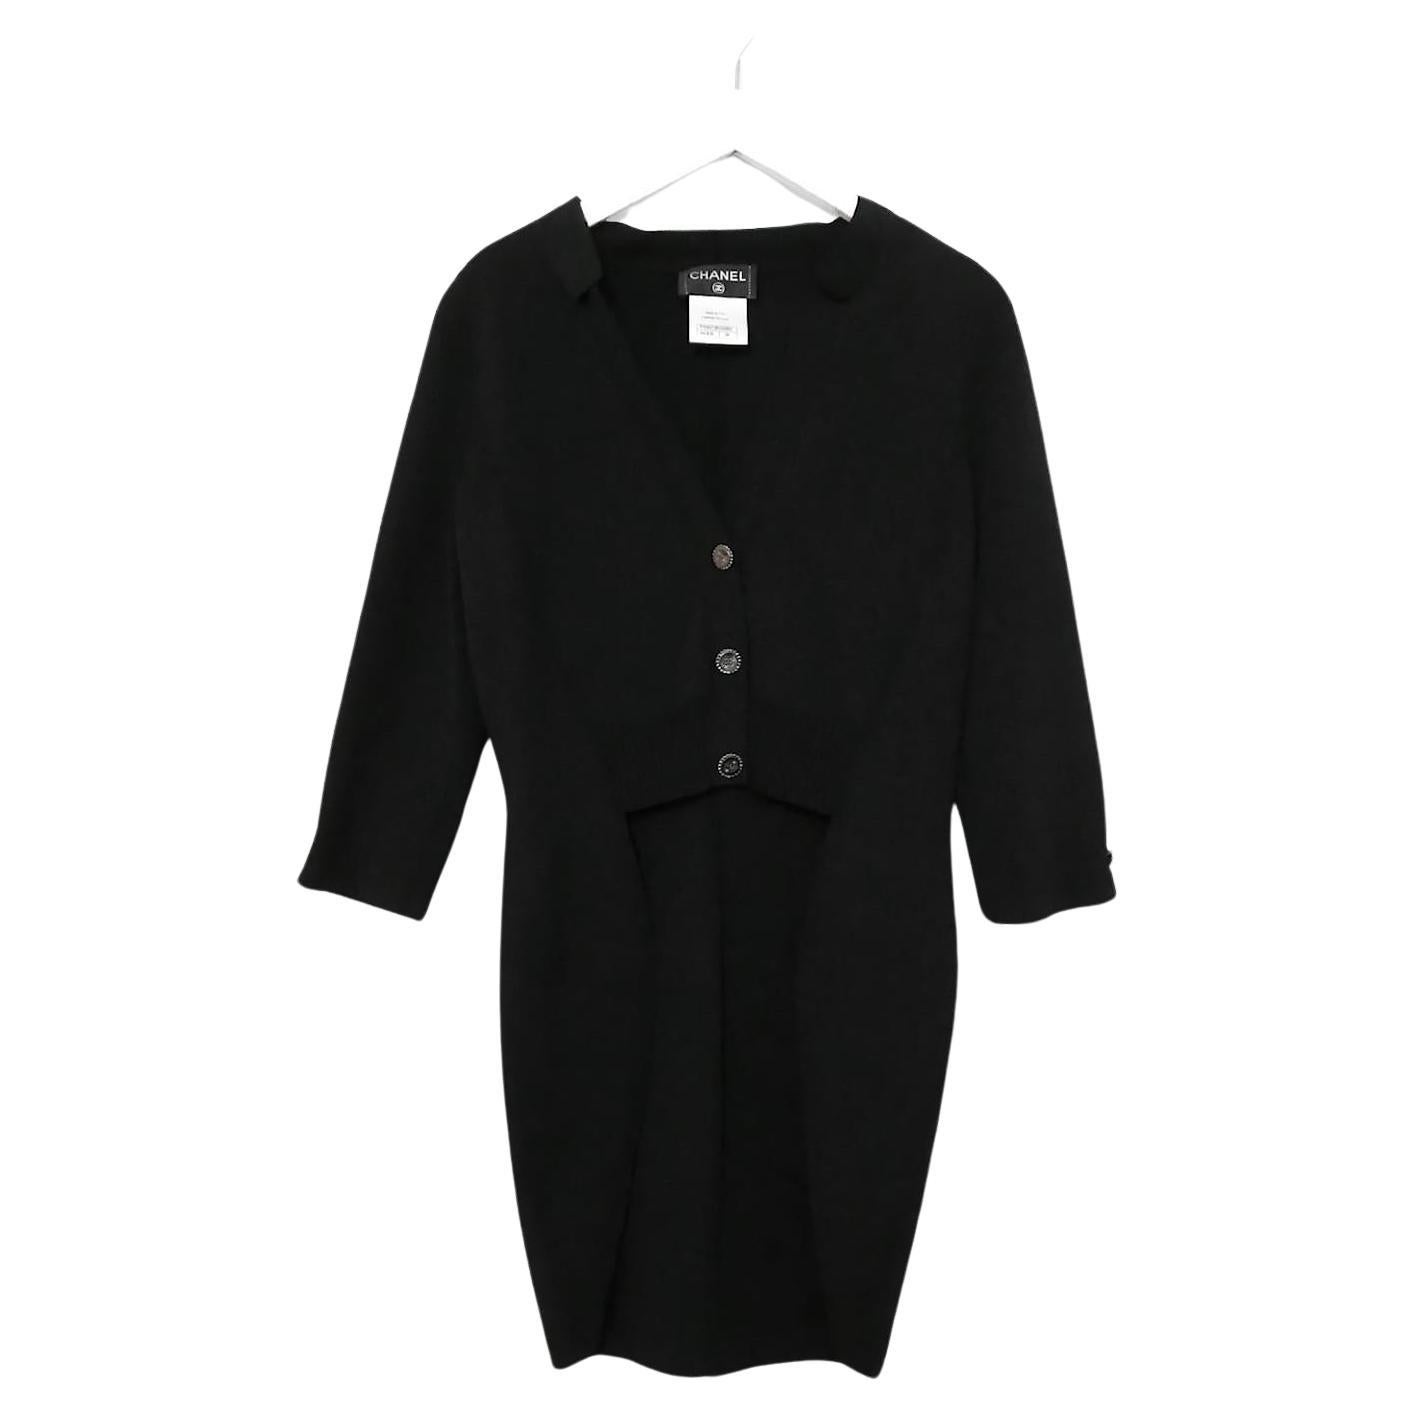 Chanel Resort 2011 - Manteau en maille - Veste noire en vente